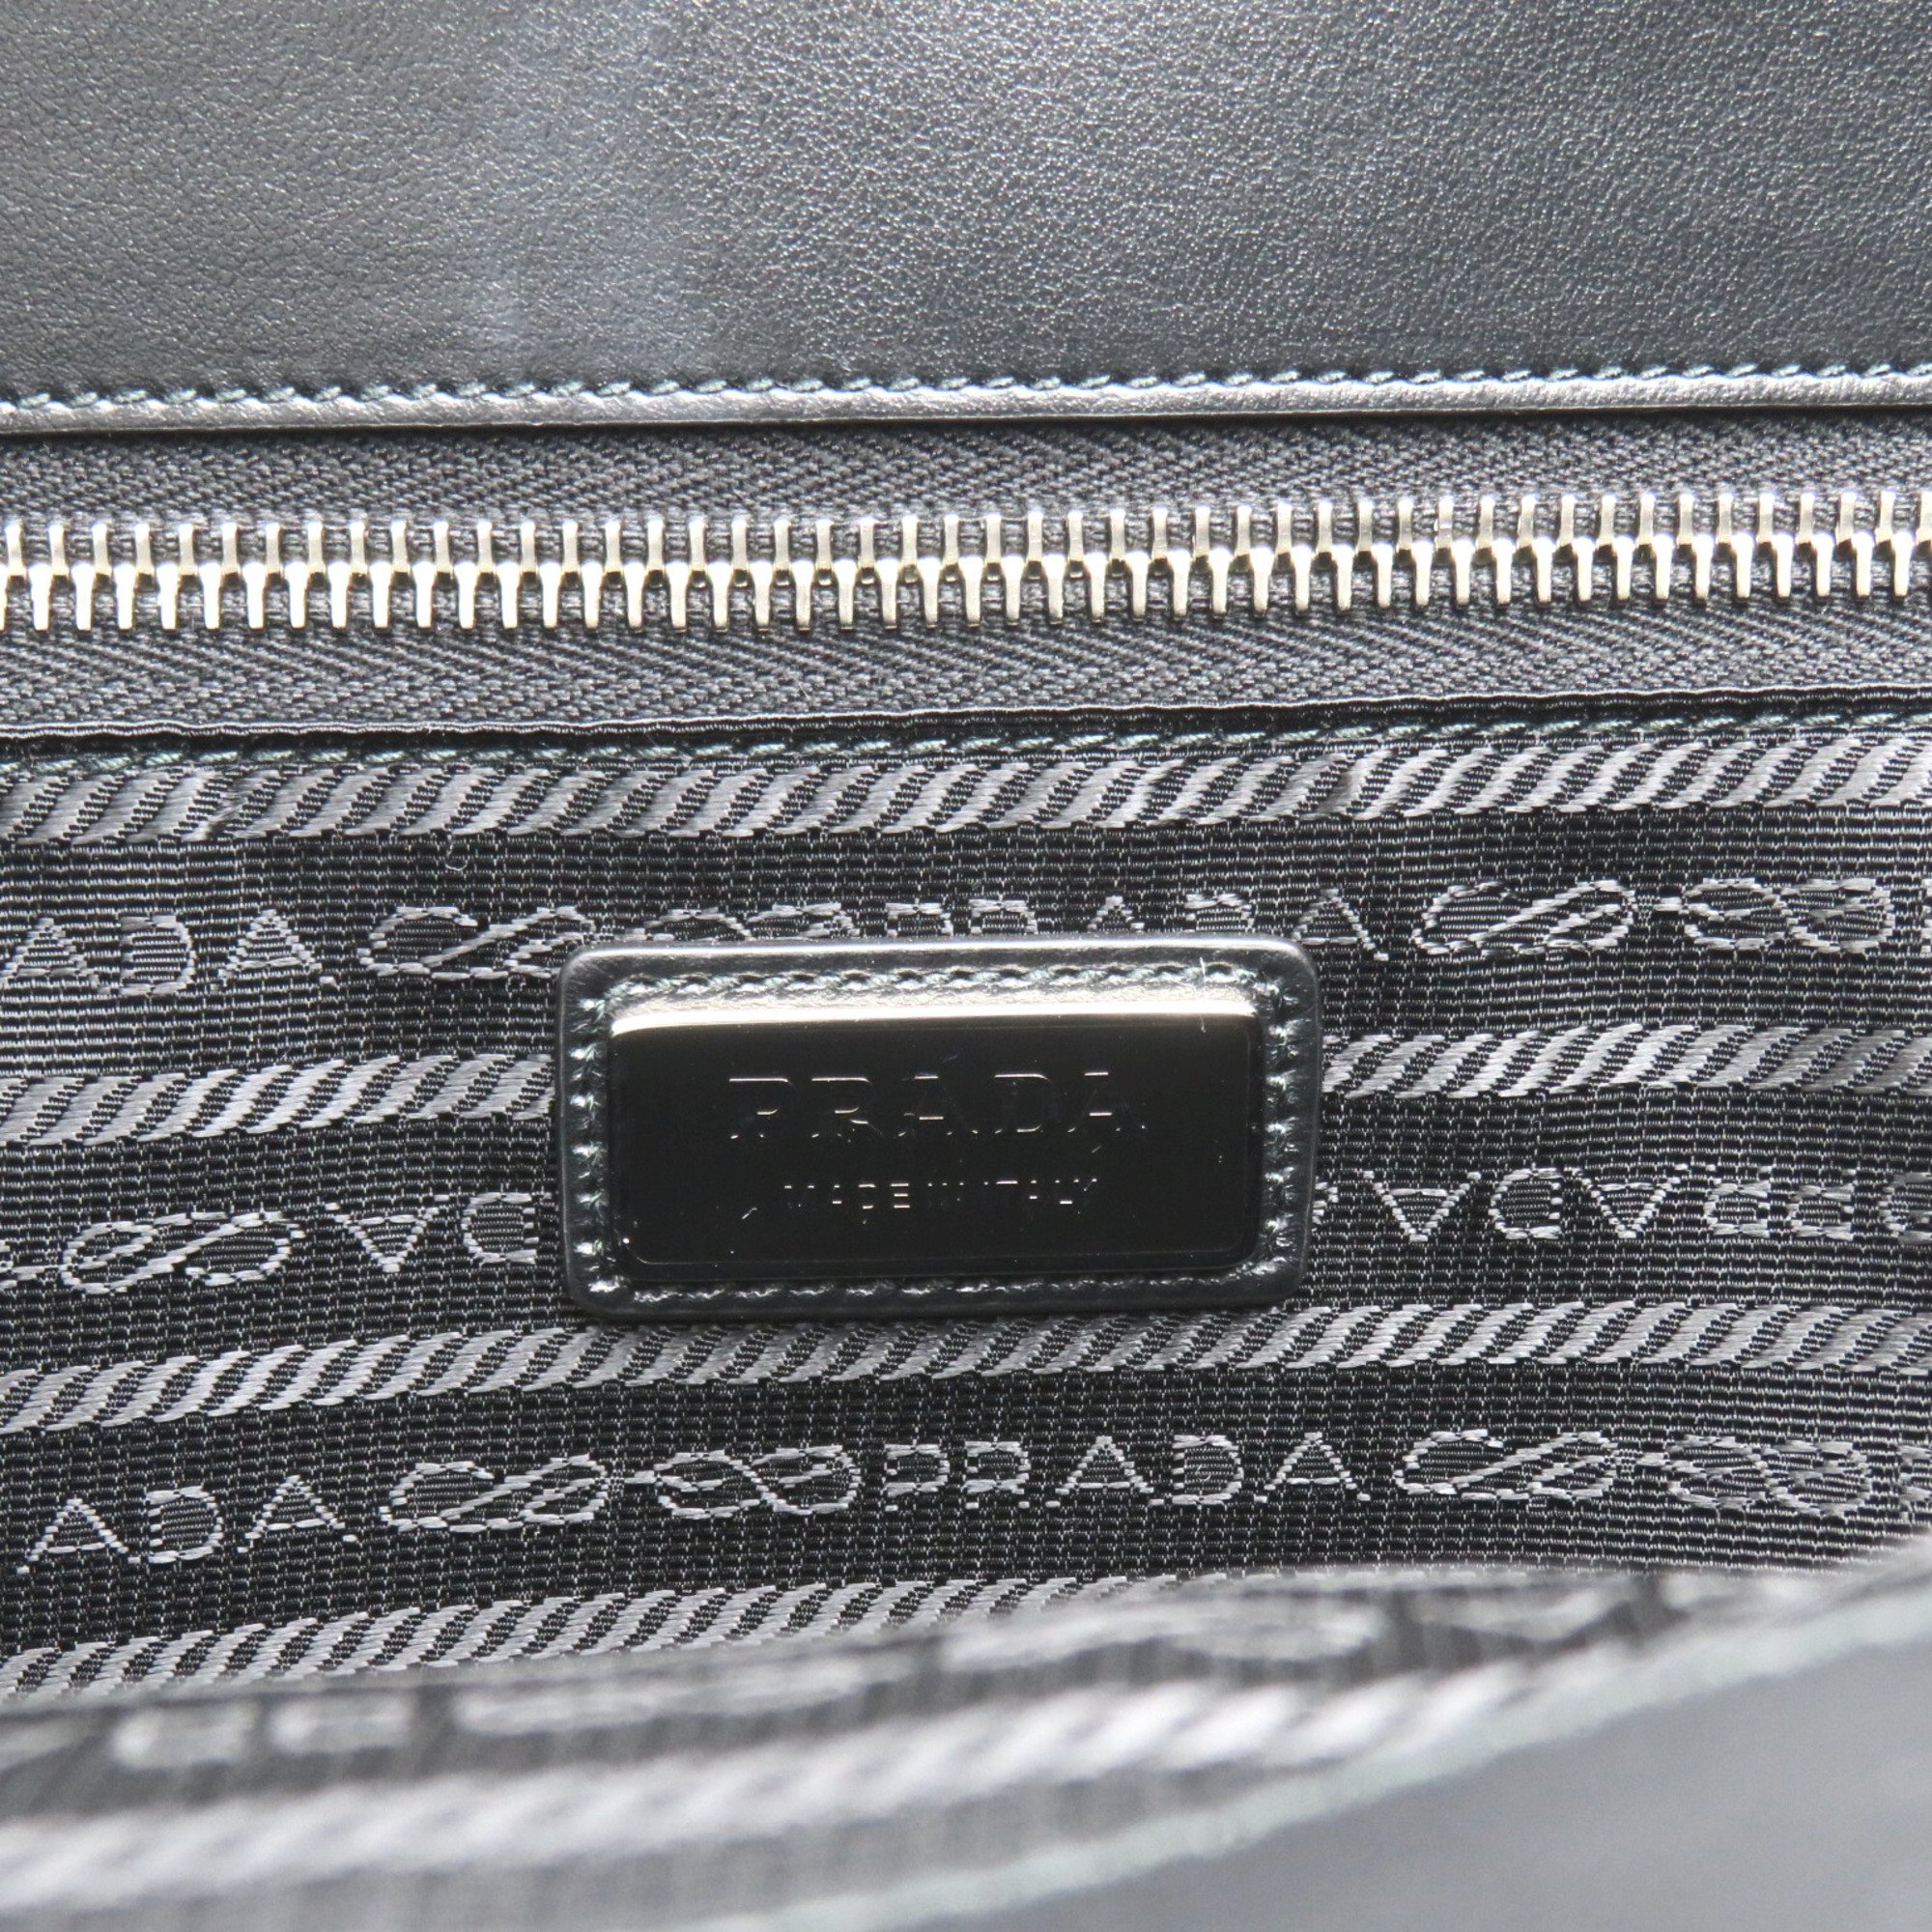 PRADA Shopping Tote Bag Black NERO leather 2VG113ZO6F0002